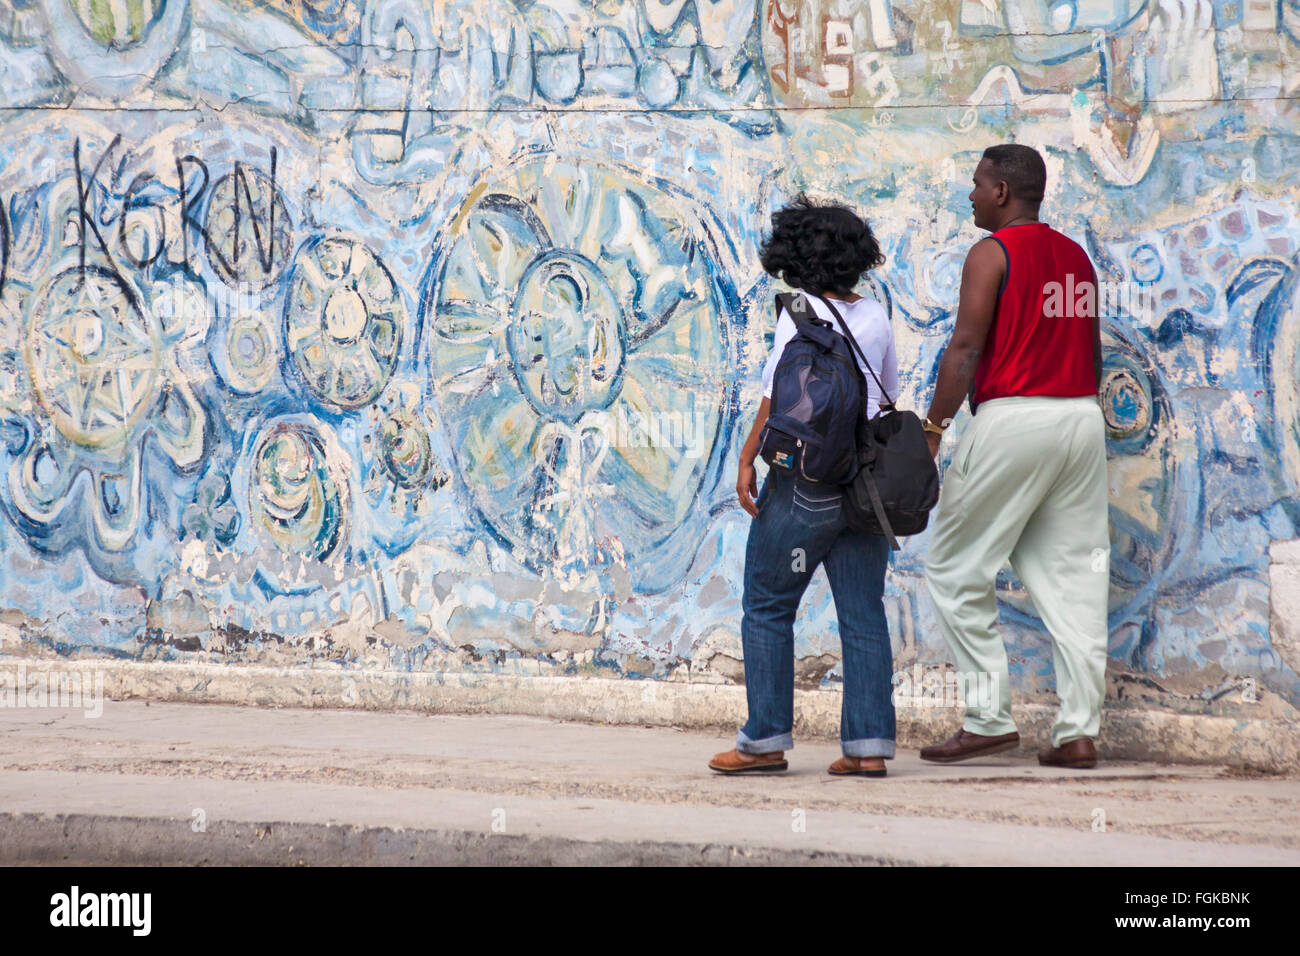 Kubanische paar vorbeigehen Wandbilder an Wand in Havanna, Kuba, Westindische Inseln, Karibik, Mittelamerika Stockfoto